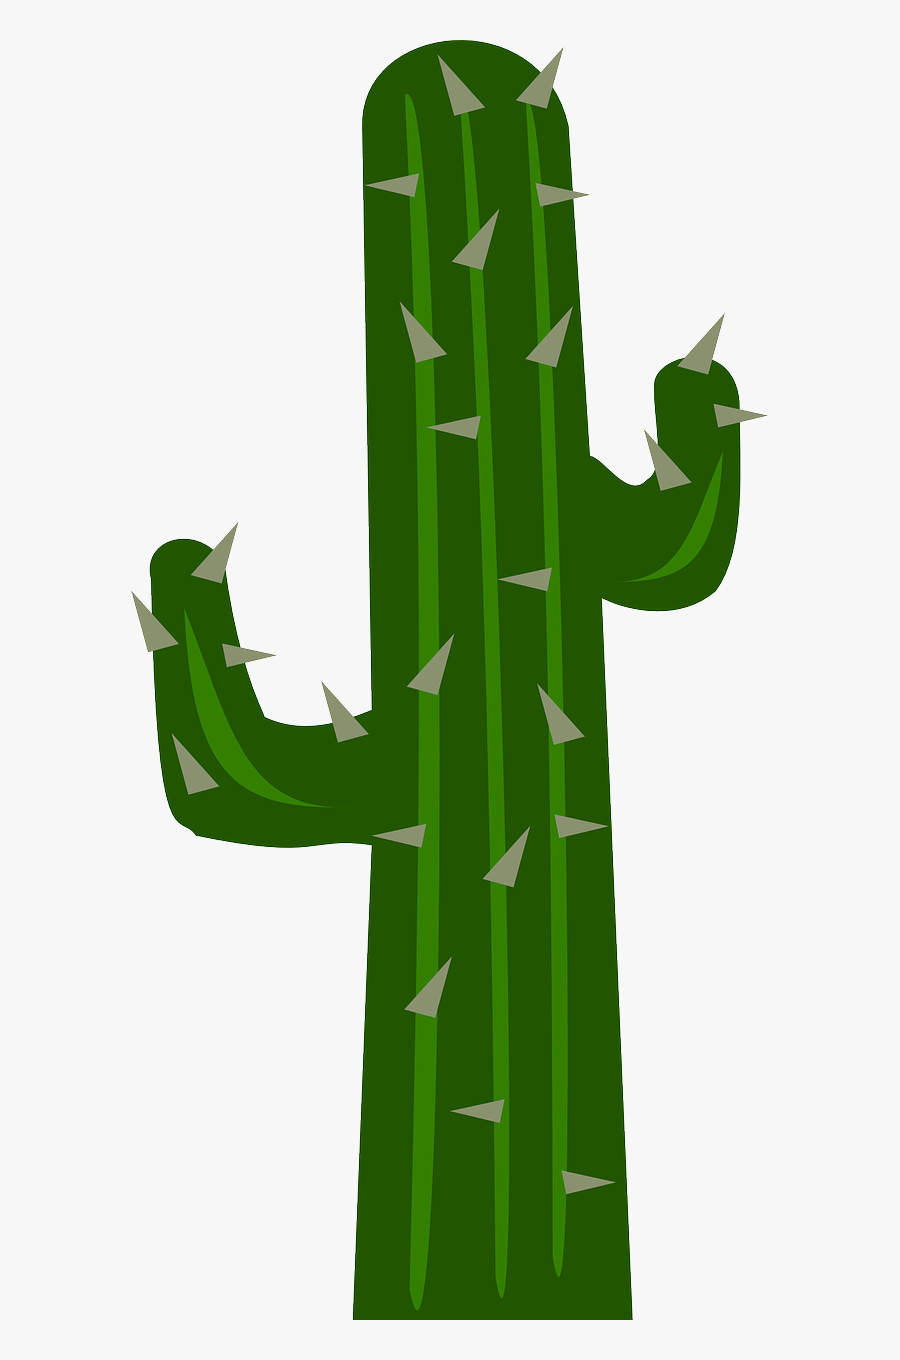 Transparent Background Cartoon Cactus Png, Transparent Clipart